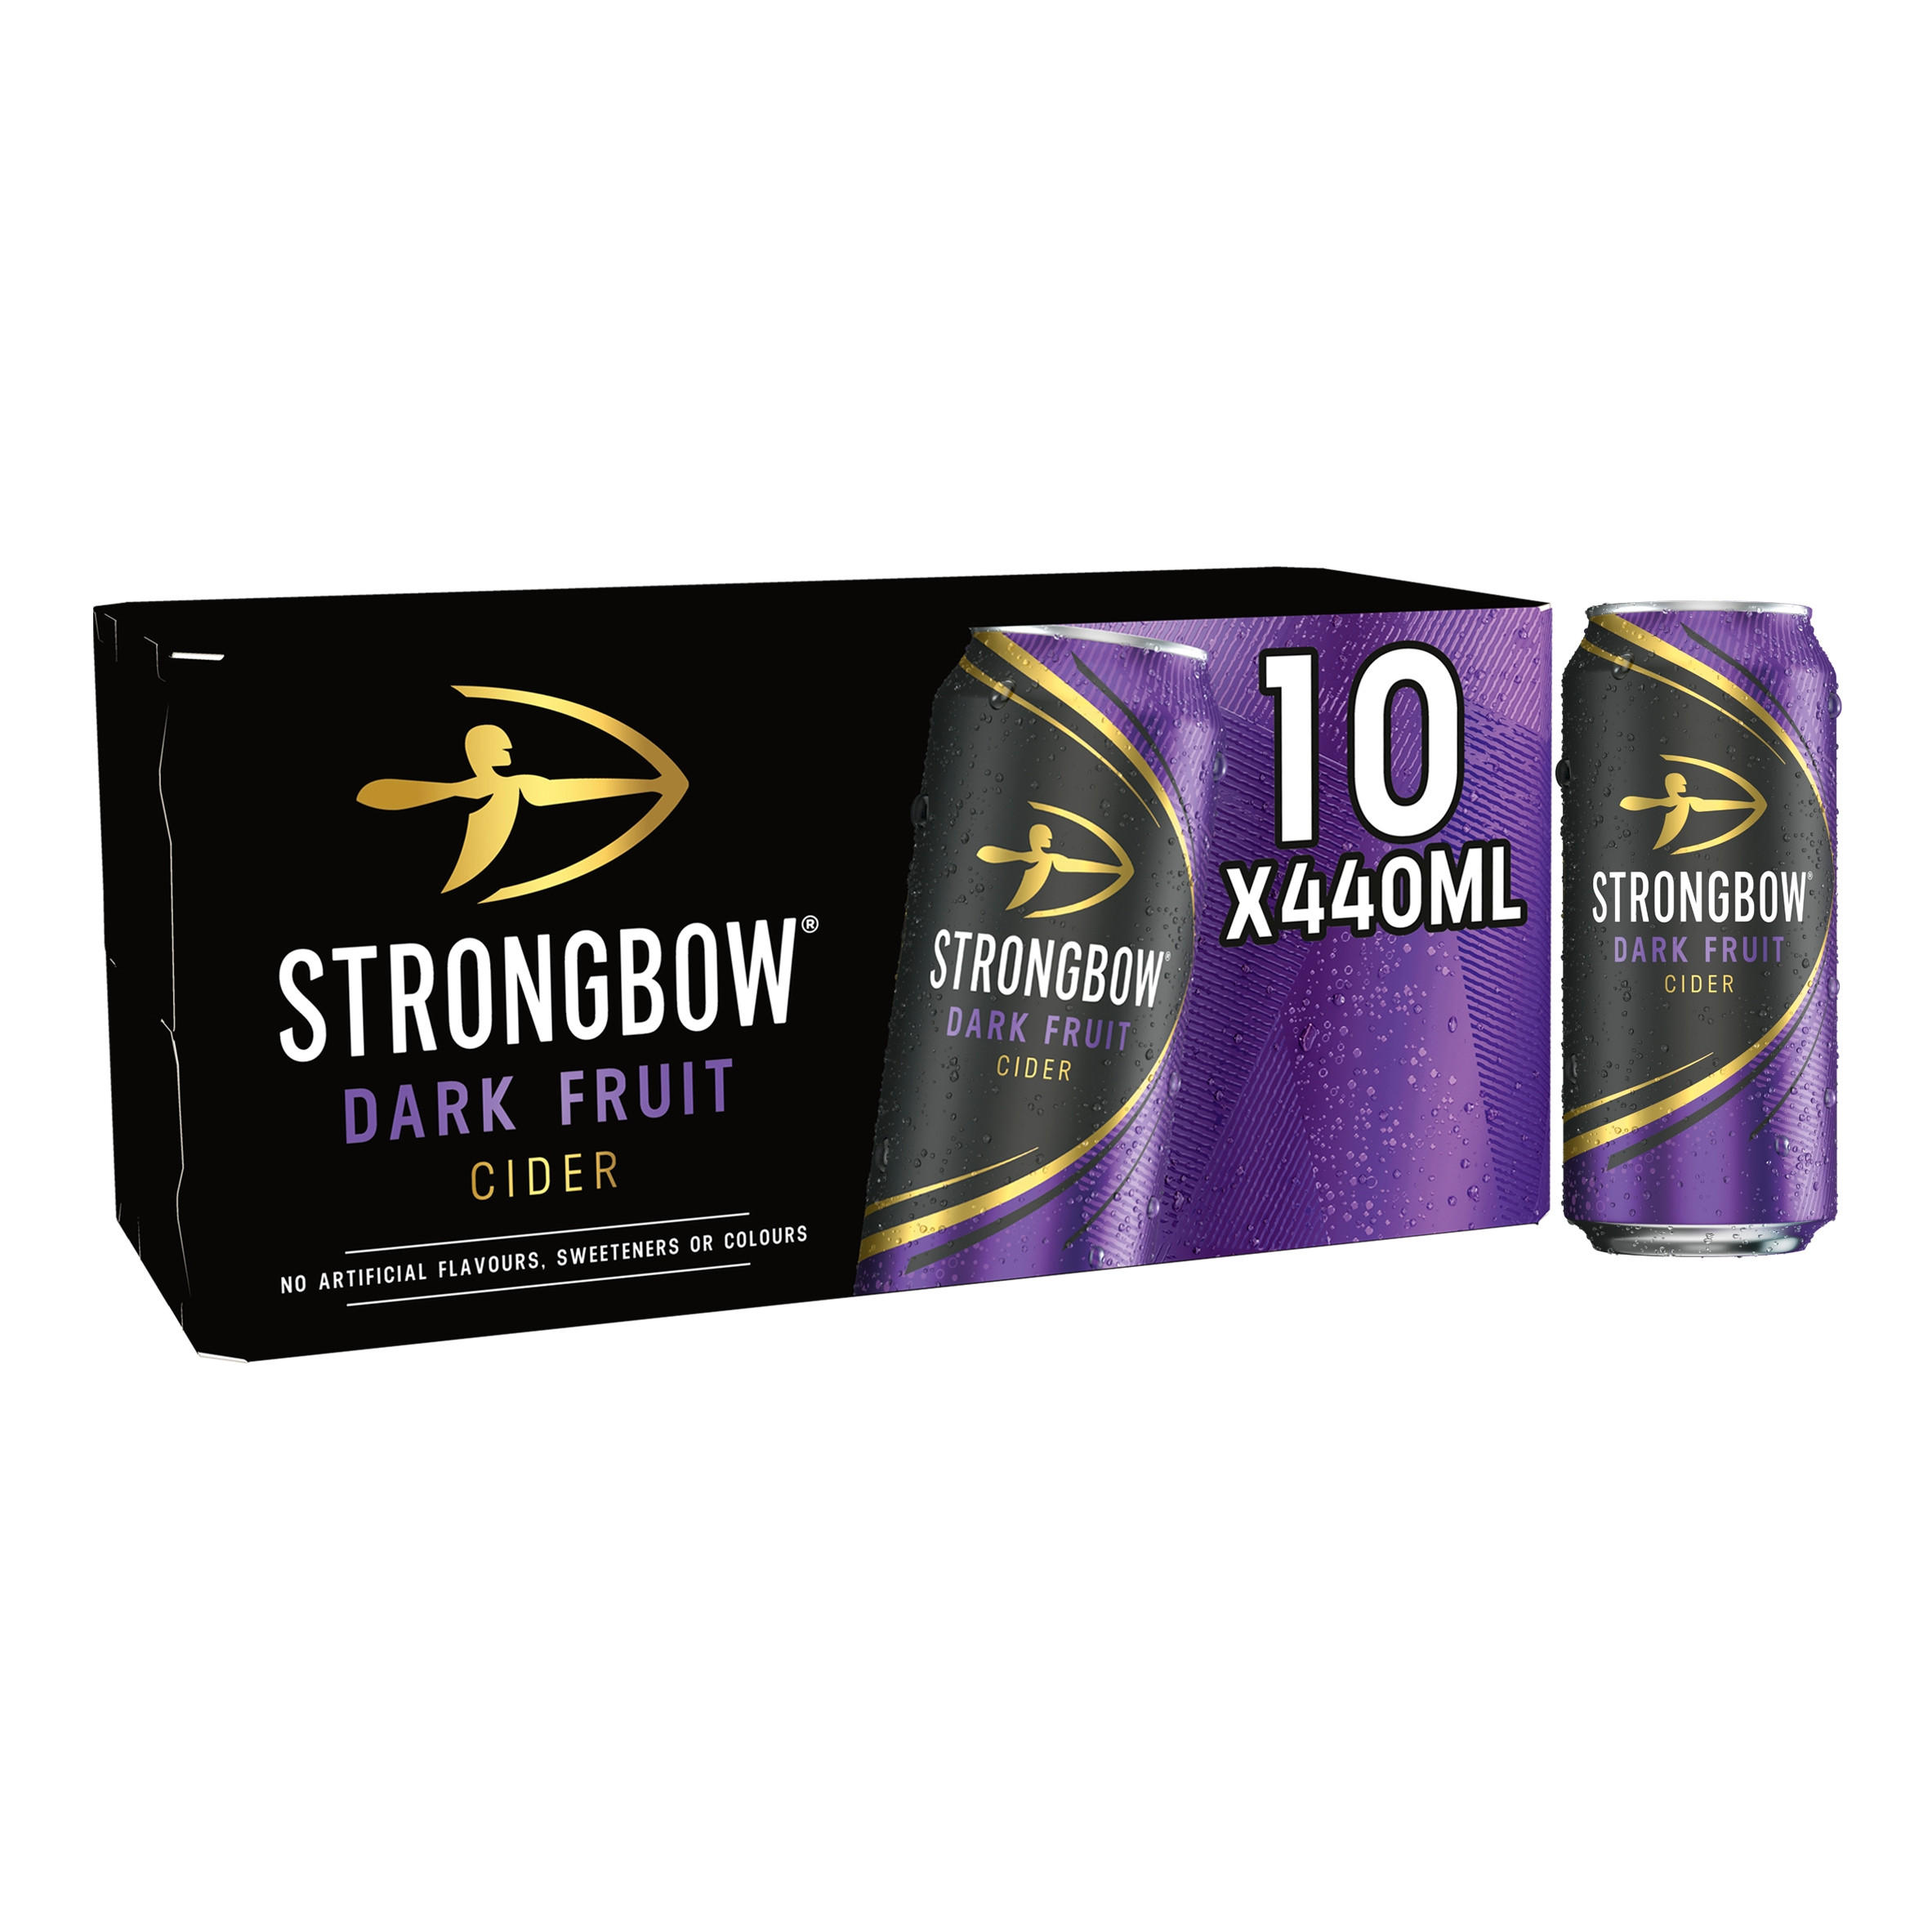 Strongbow Dark Fruit Cider 10 X 440ml Cans Cider Iceland Foods